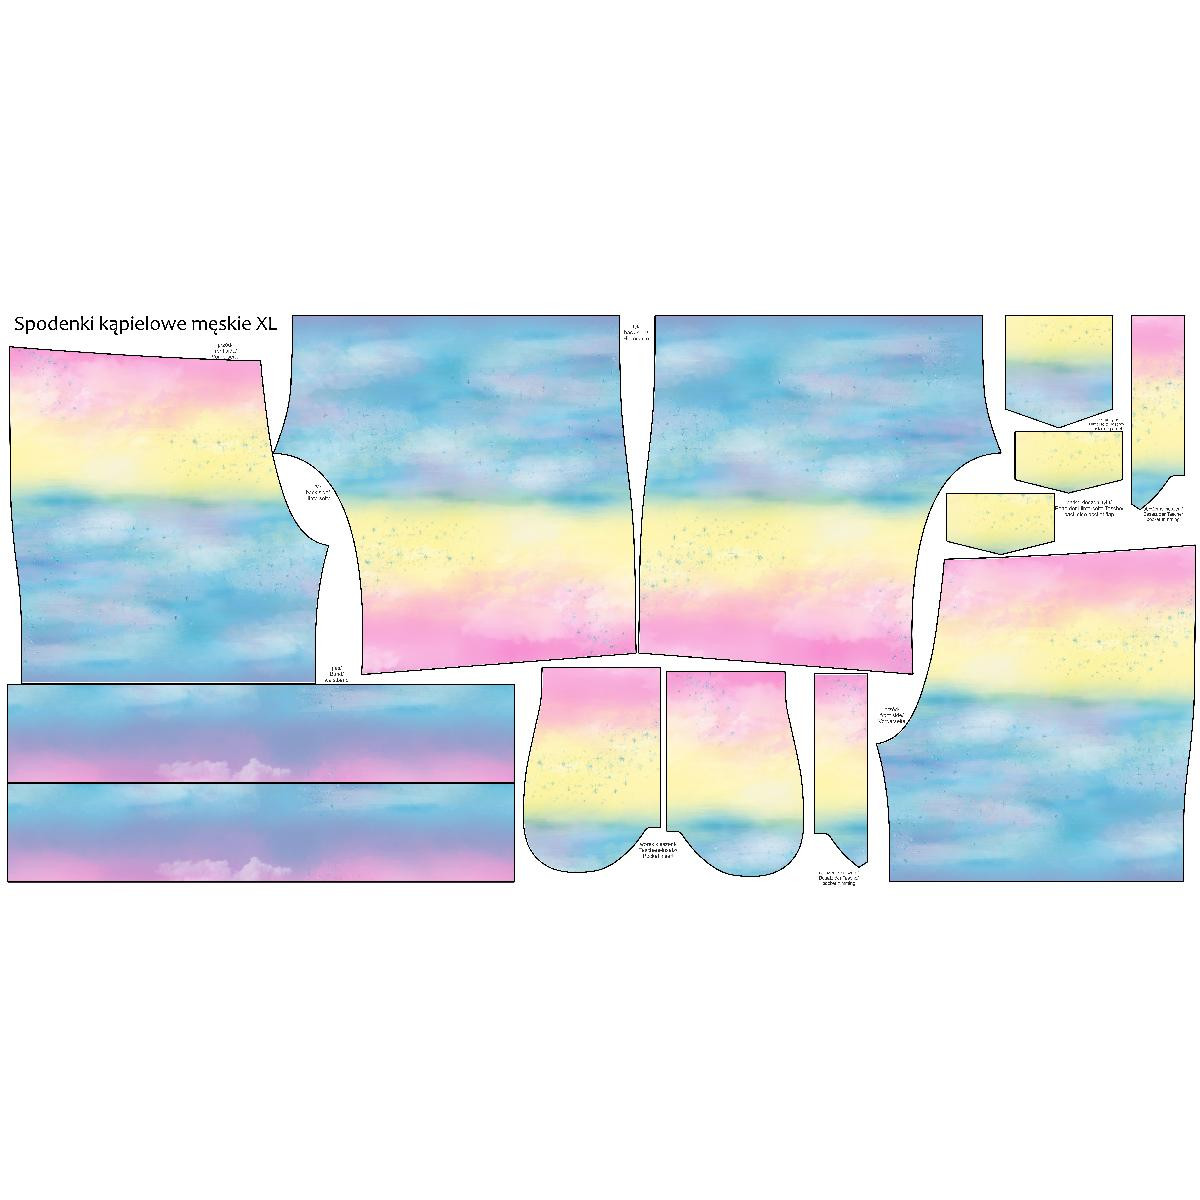 Men's swim trunks - RAINBOW OCEAN pat. 1 - sewing set